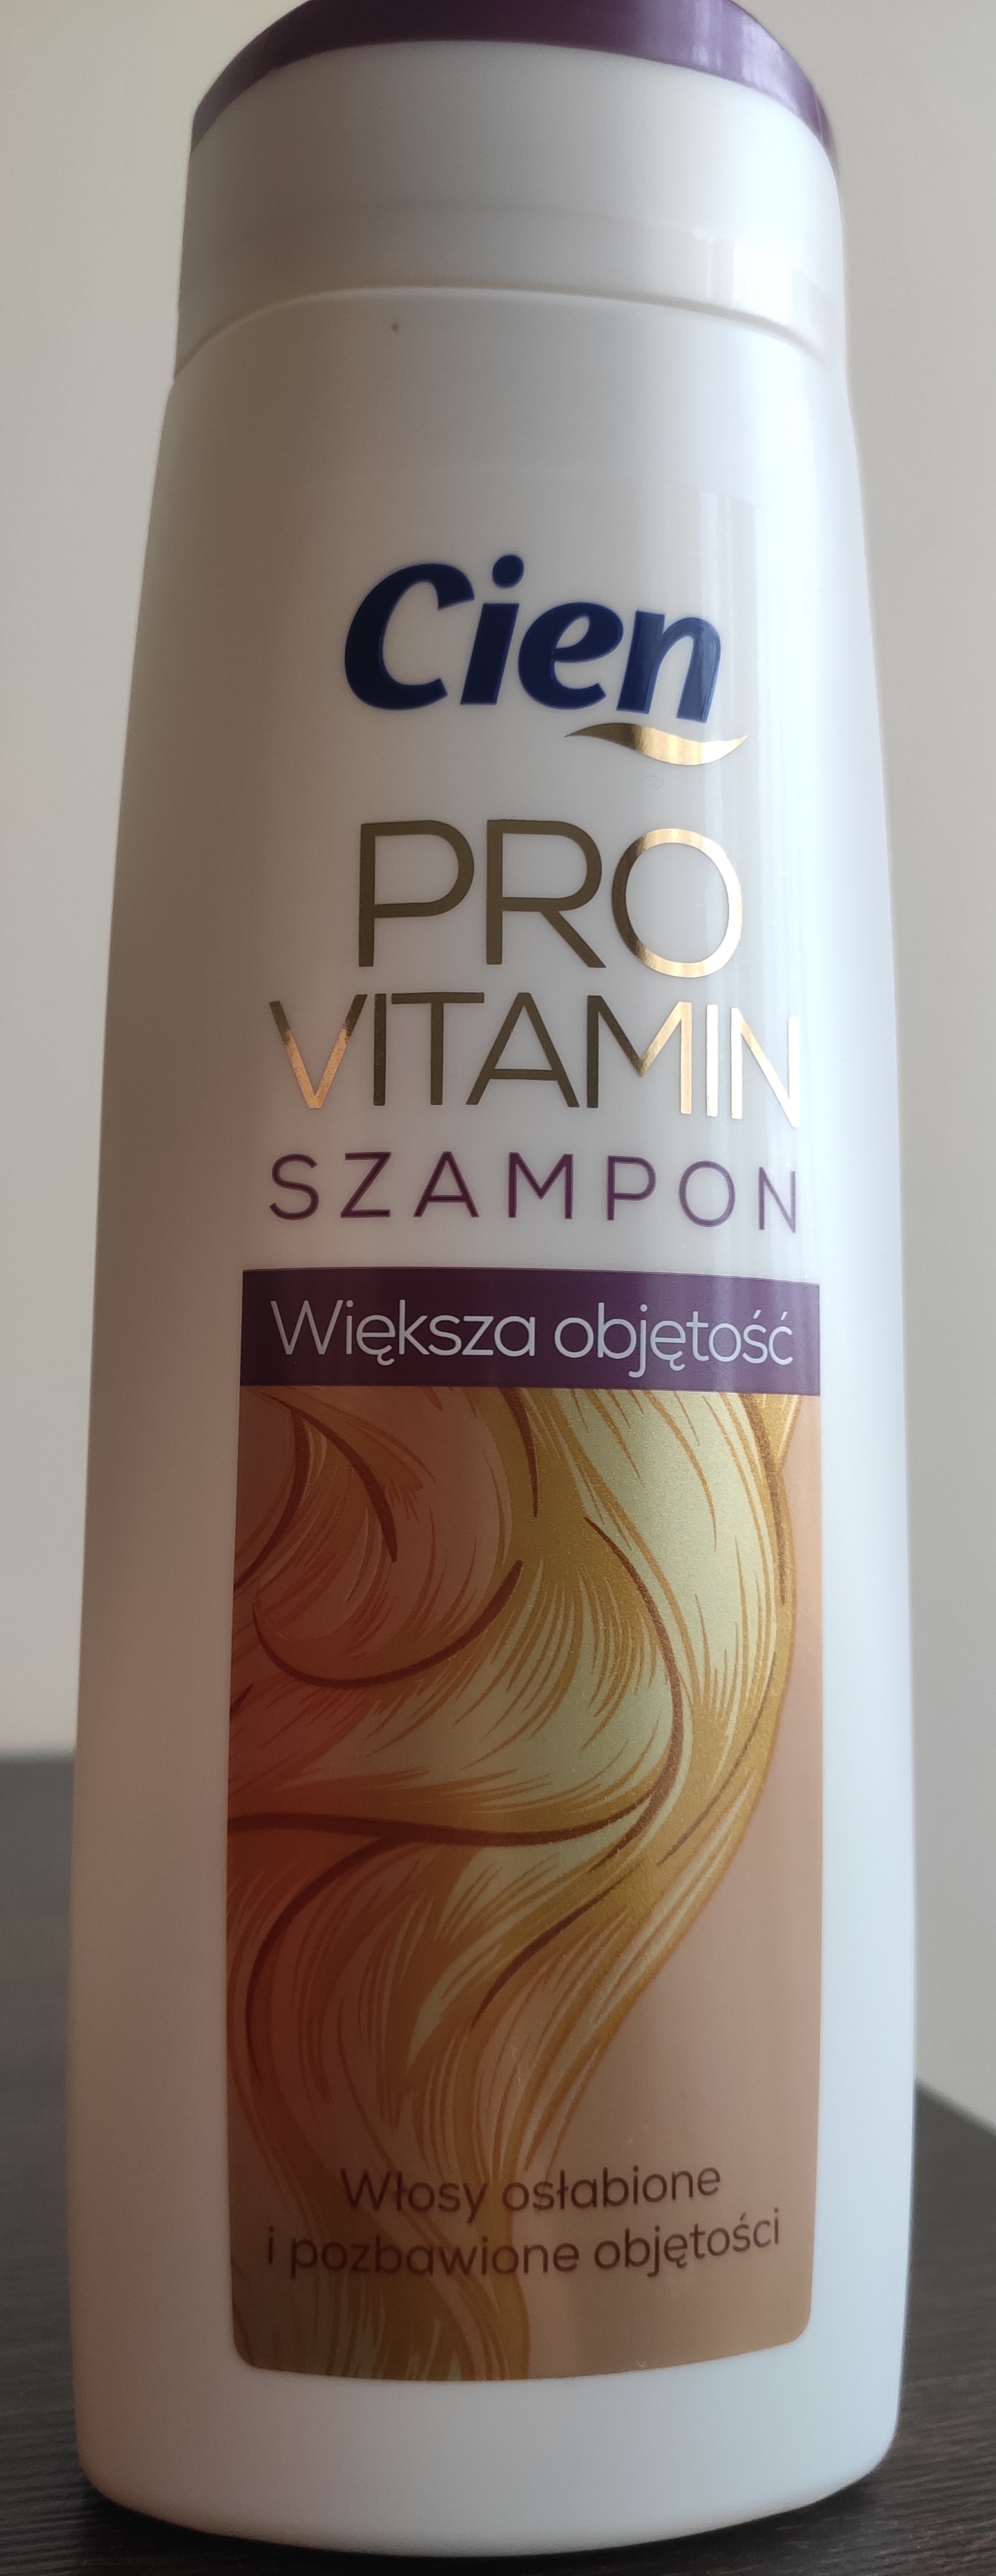 cien szampon pro vitamin cena